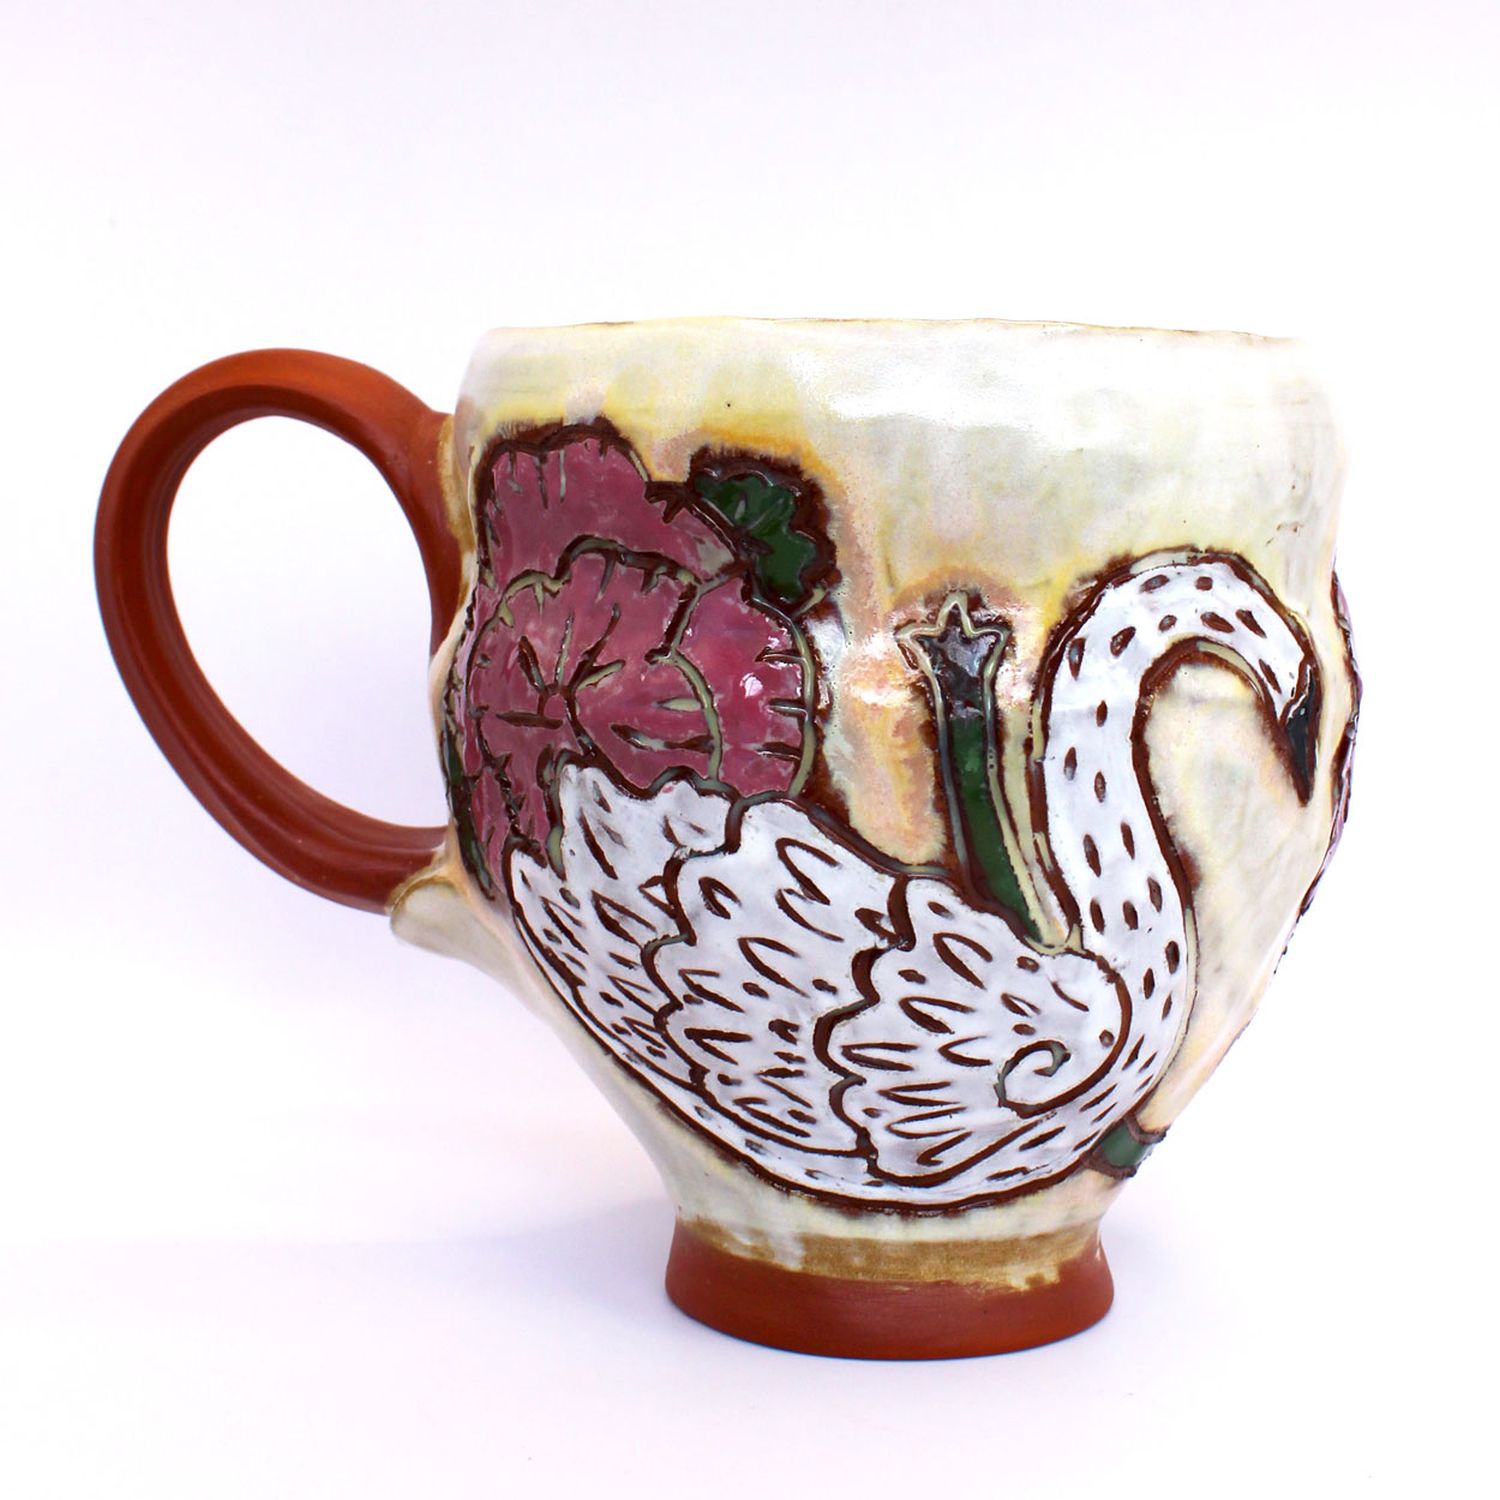 Zoe Pinnell: Swan Mug Product Image 1 of 3